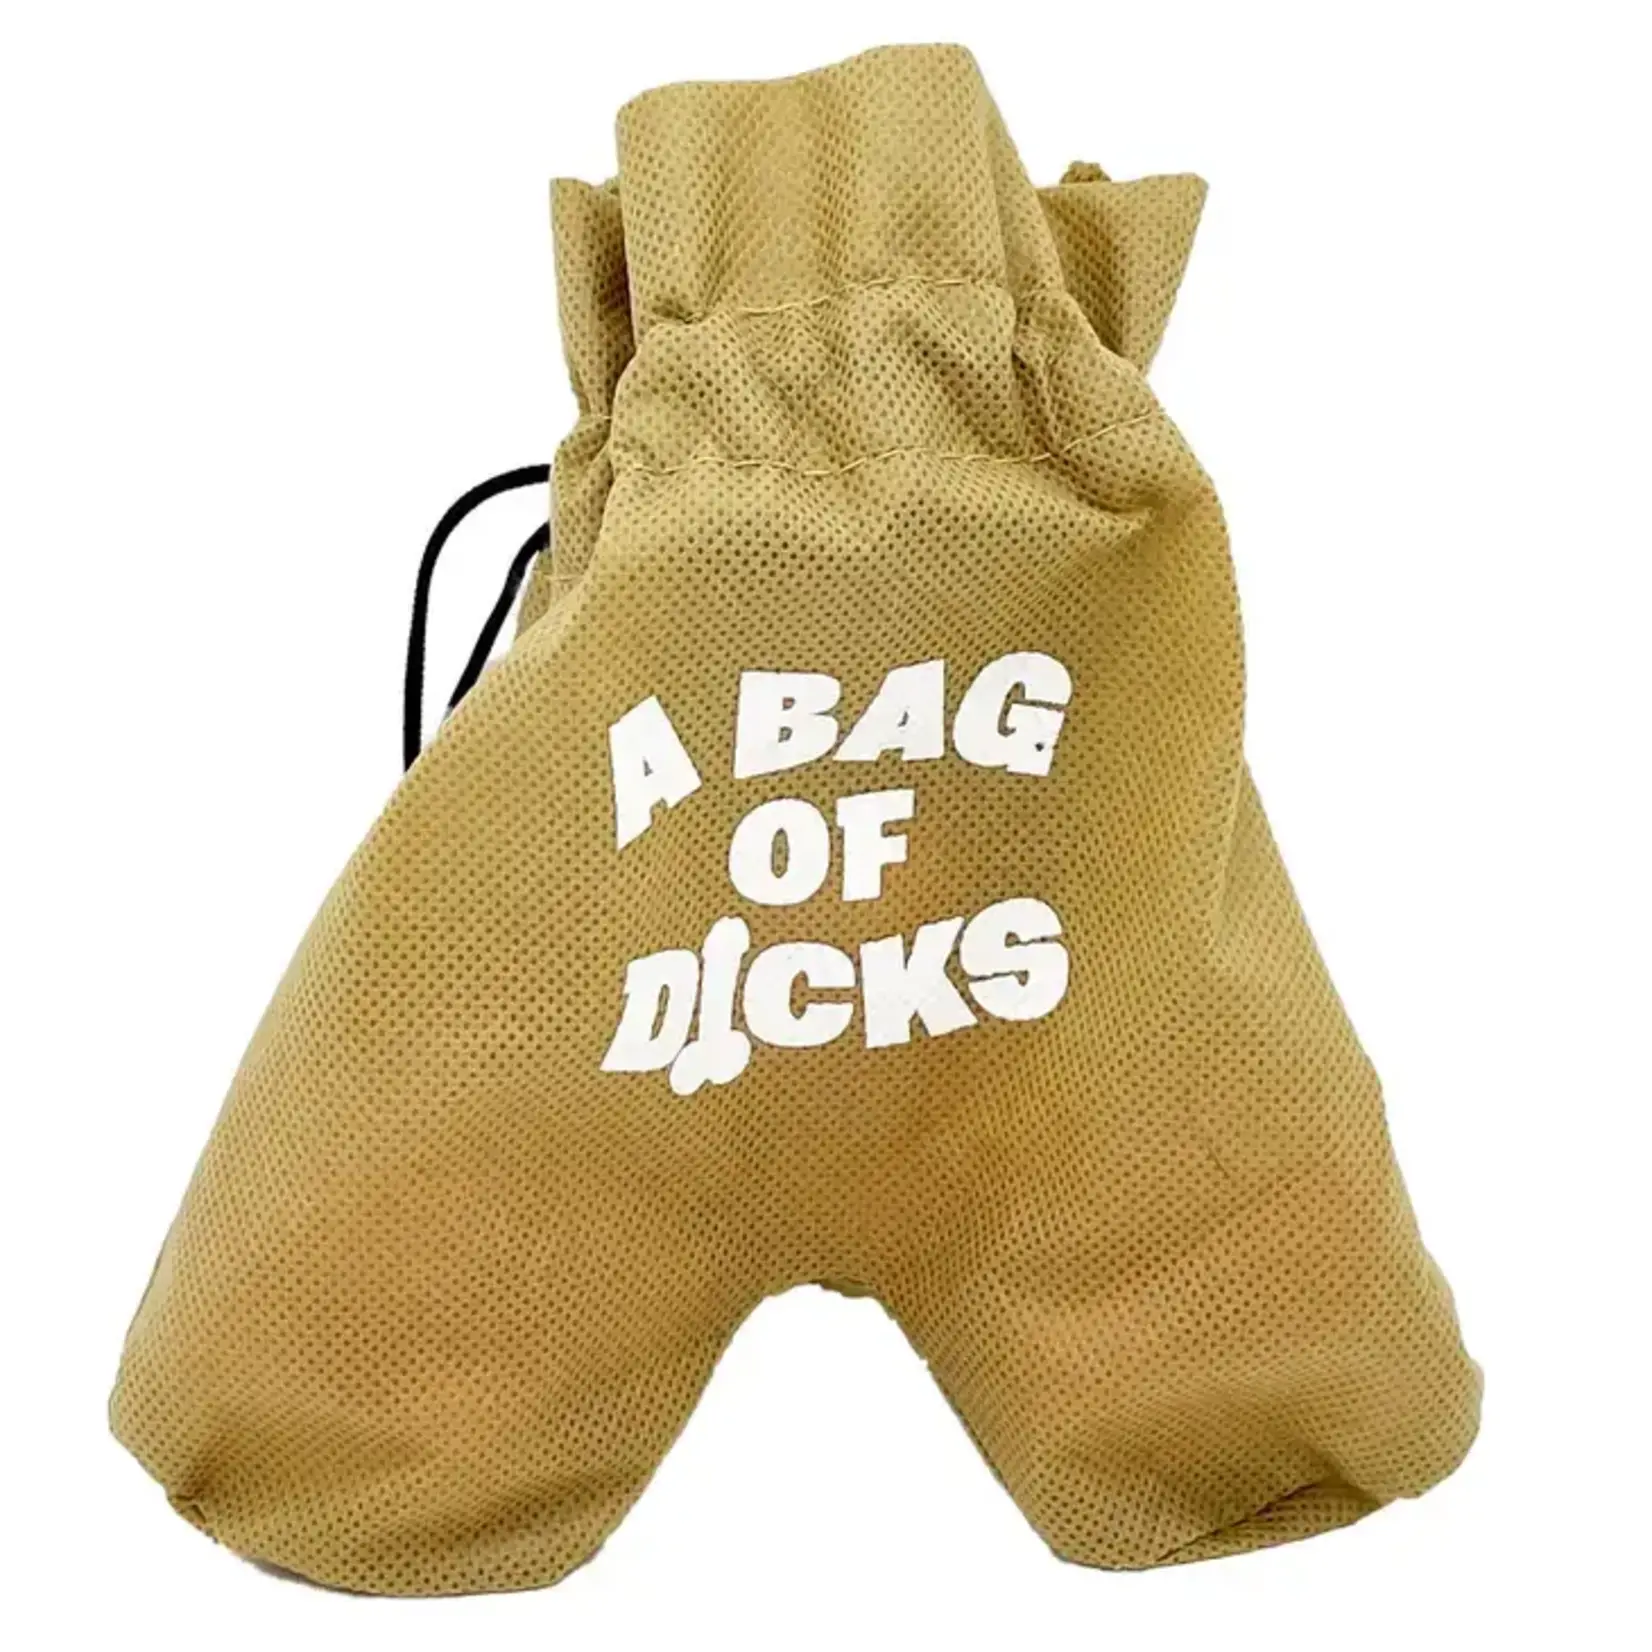 A Bag Of Dicks